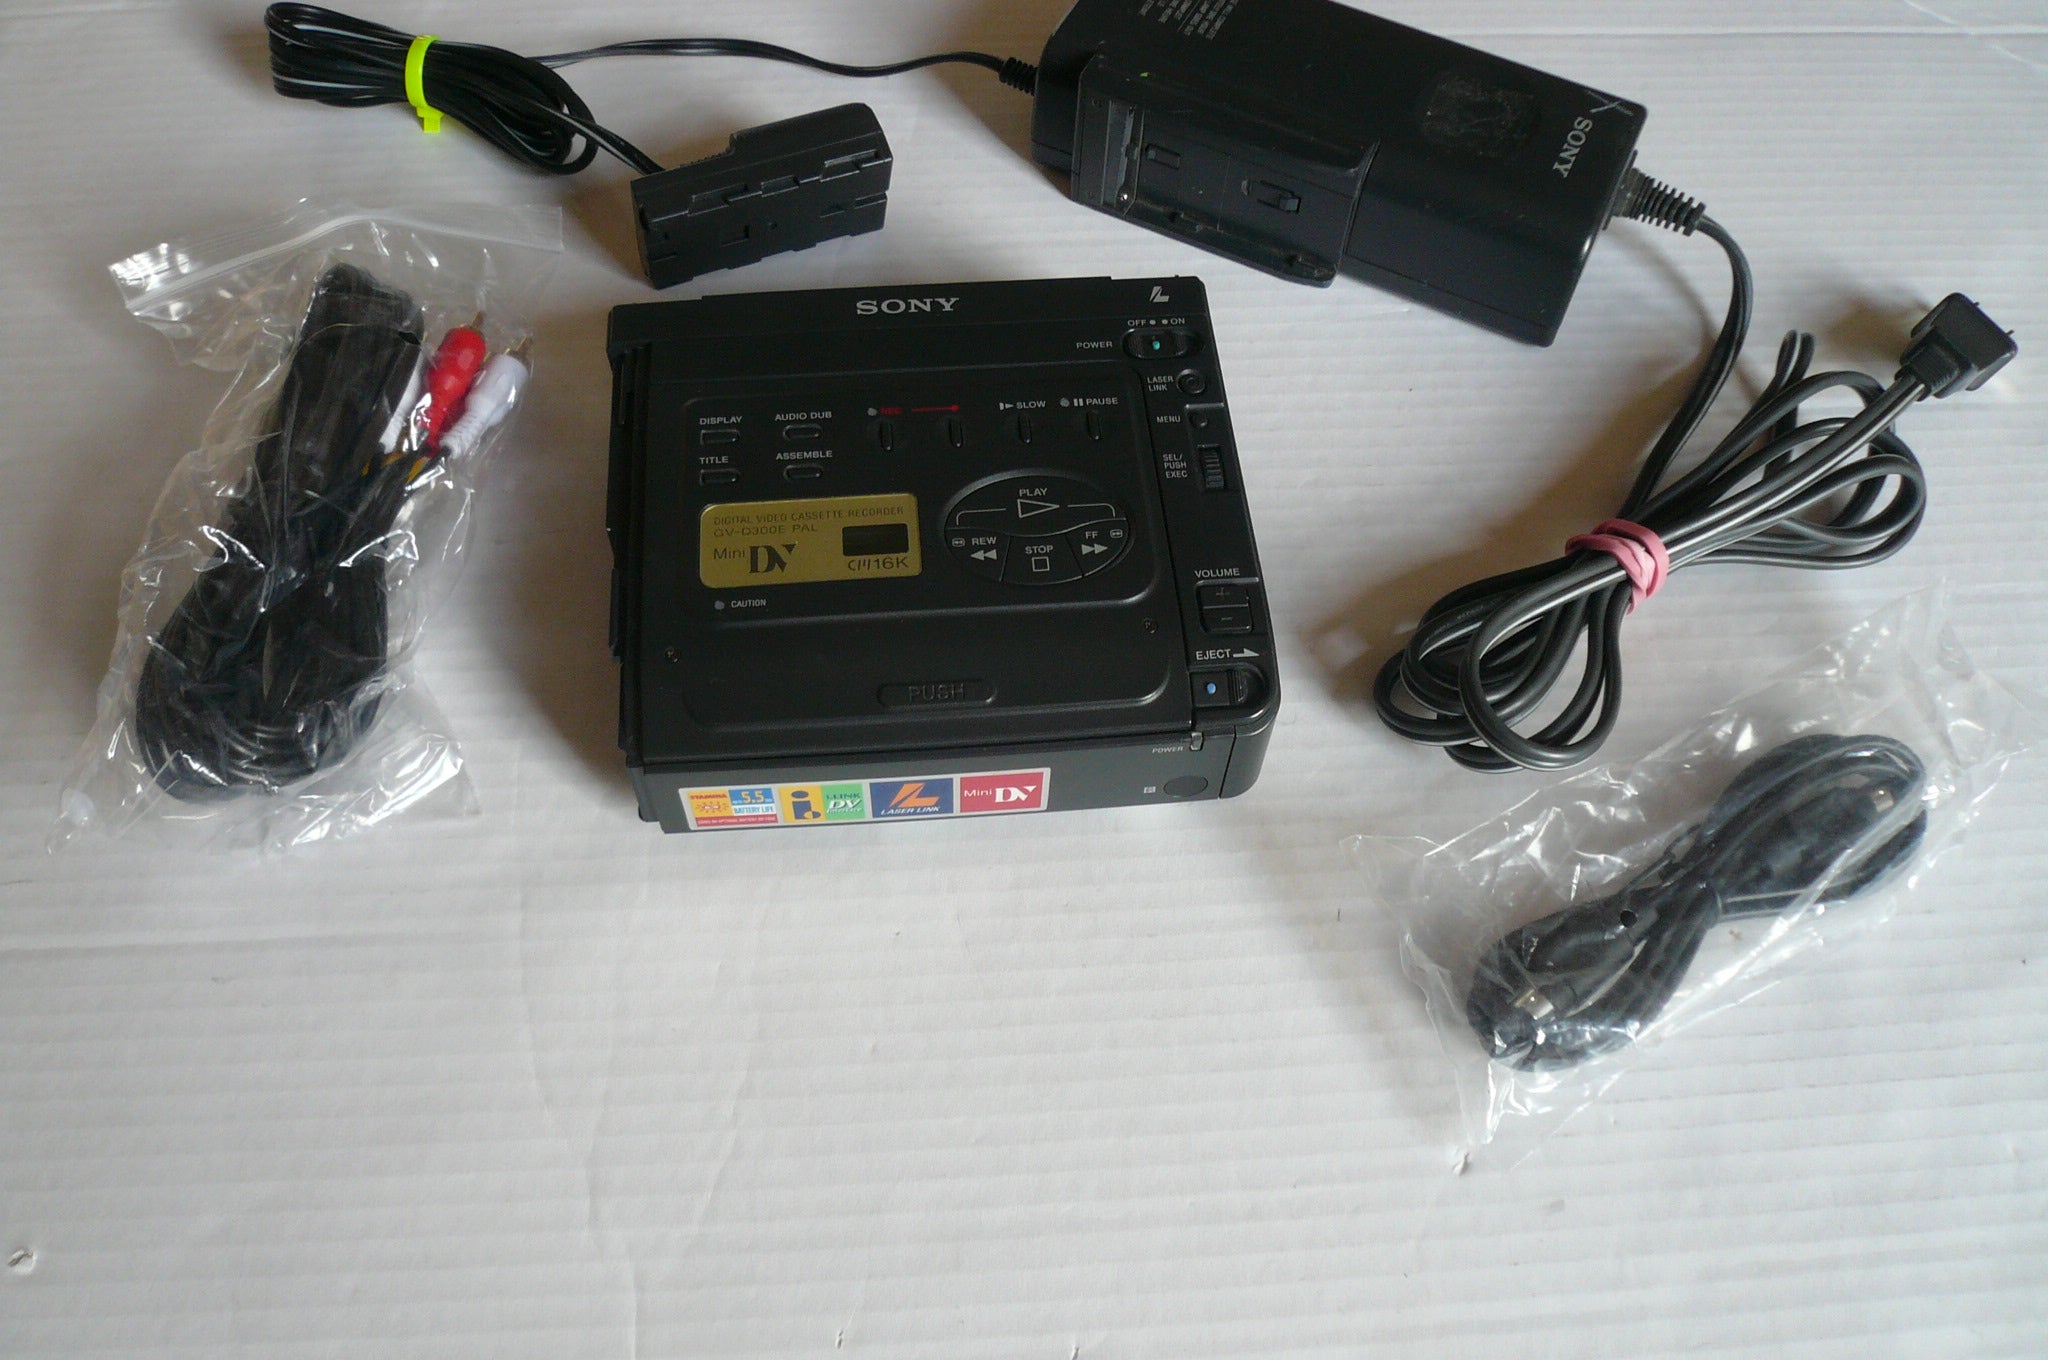  Sony GV-D300 Video Walkman Mini DV : Electrónica